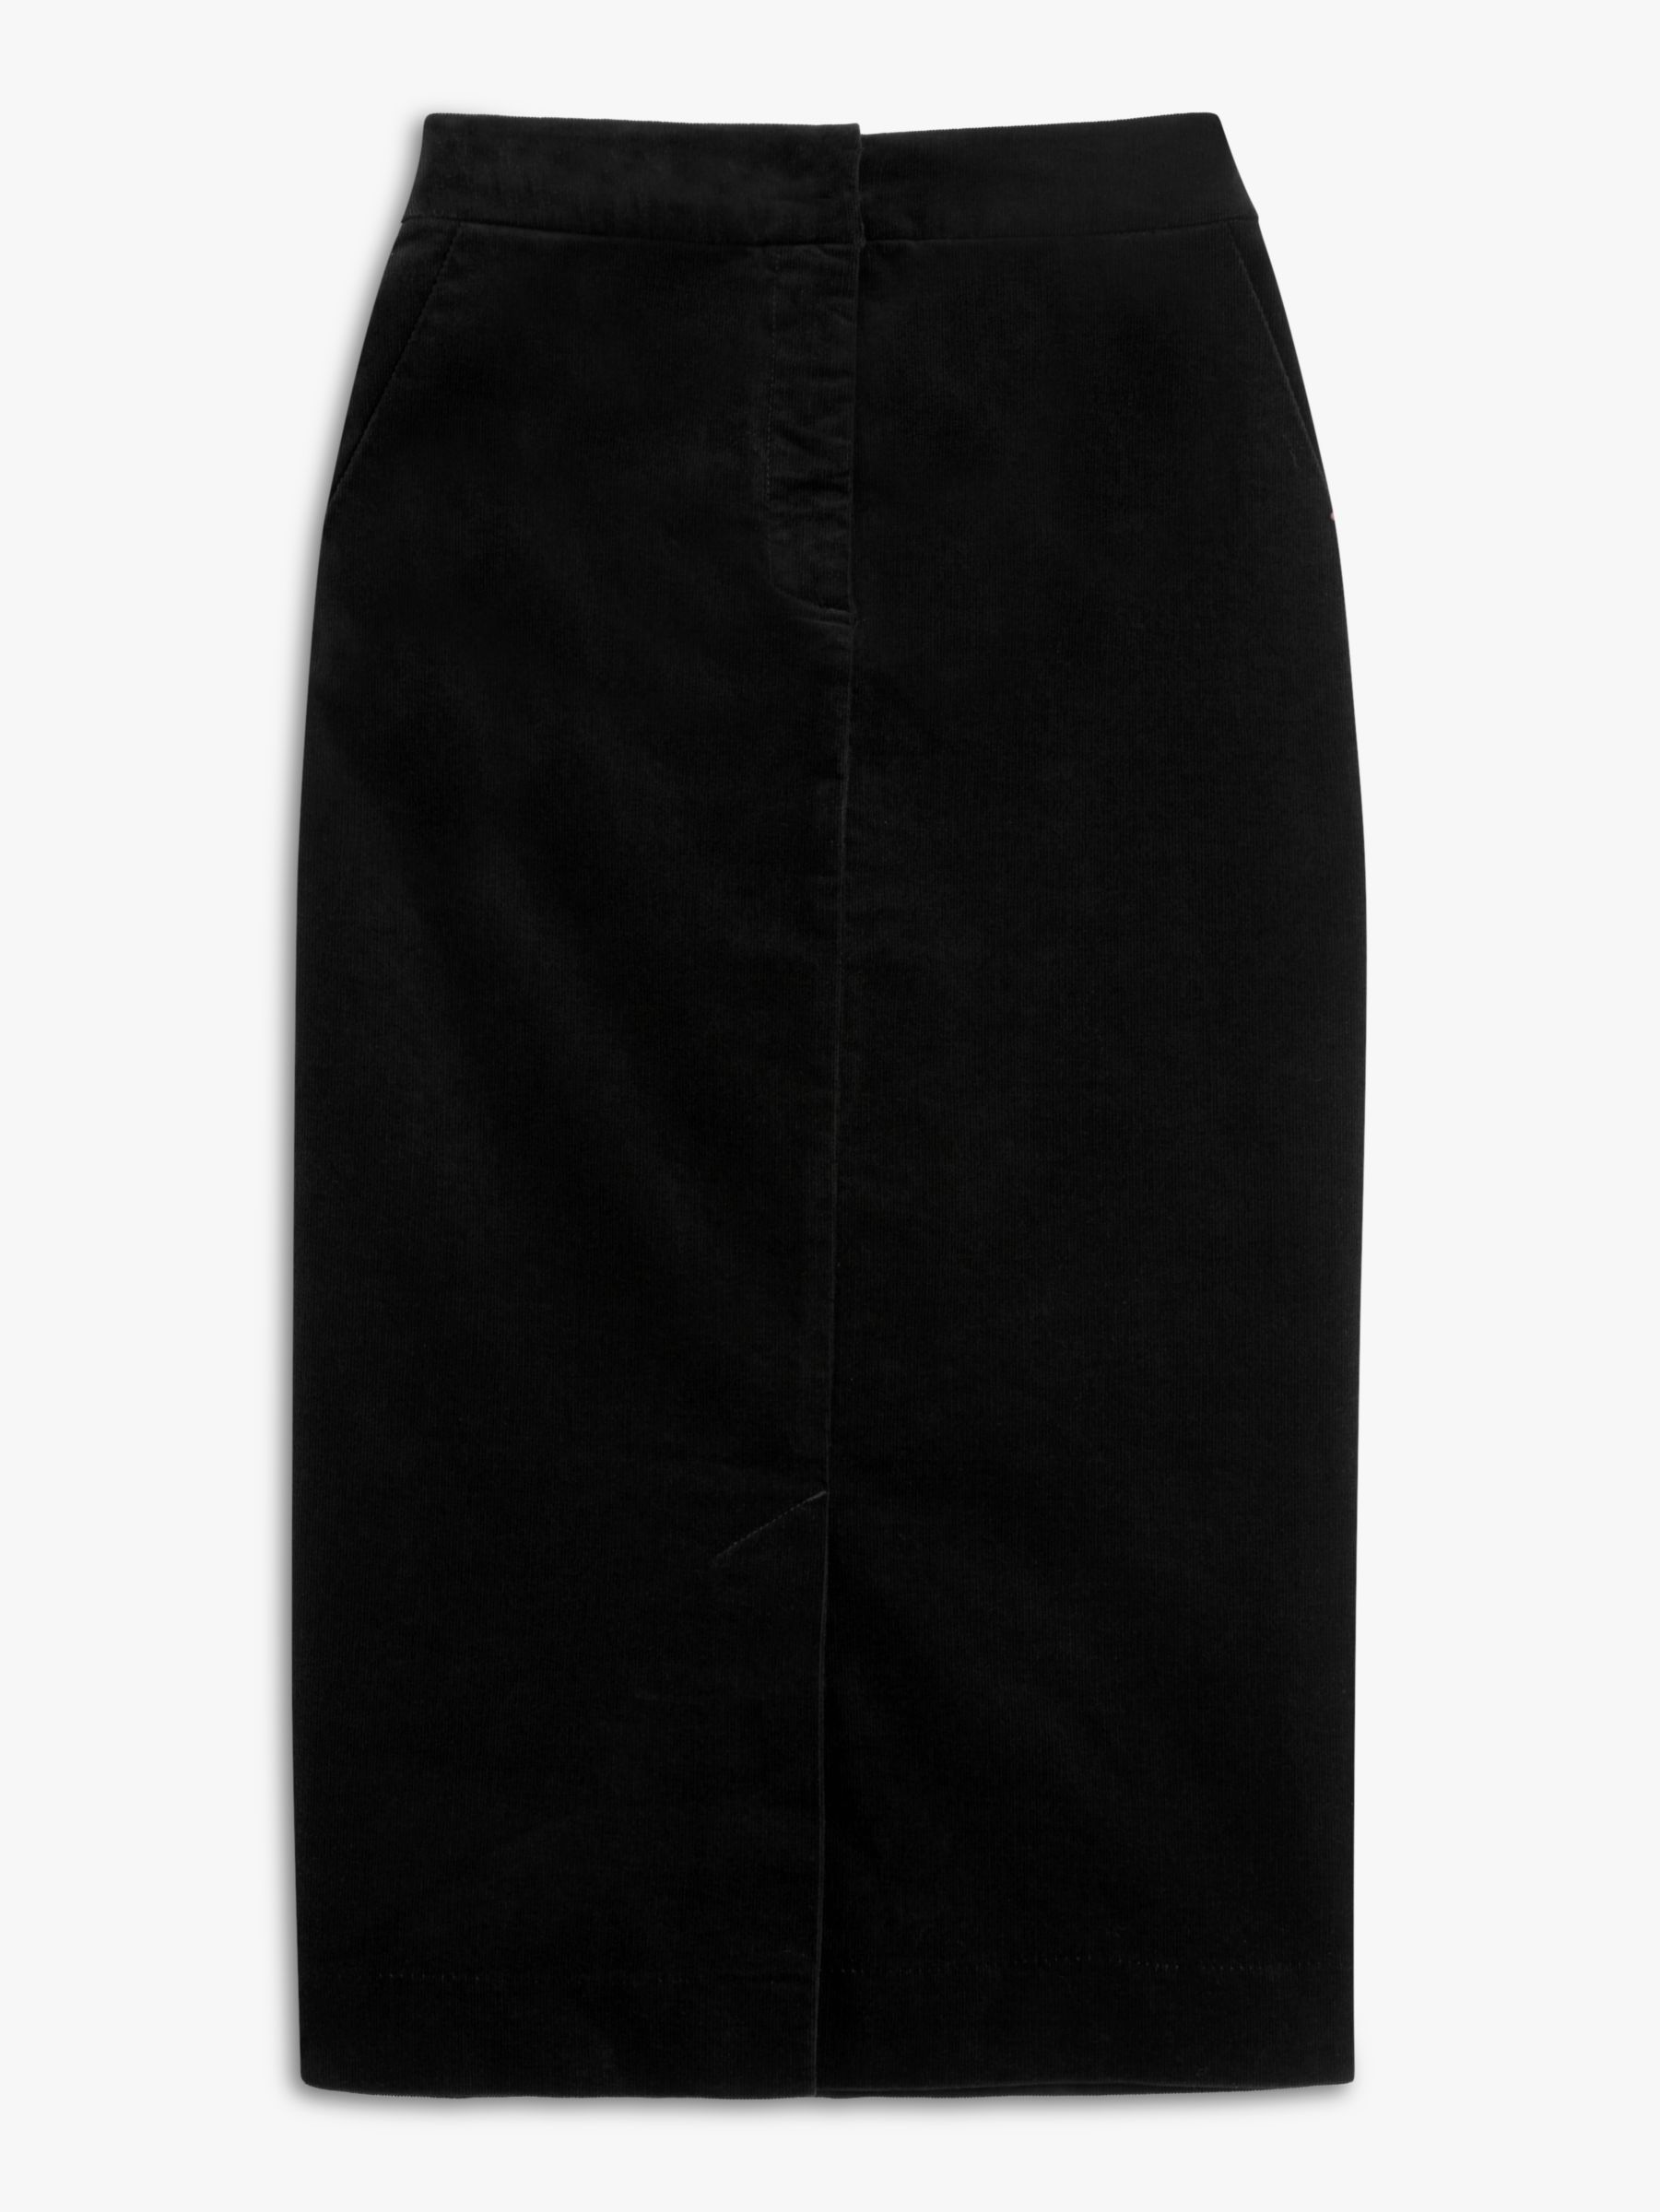 John Lewis Cord Pencil Skirt, Black at John Lewis & Partners